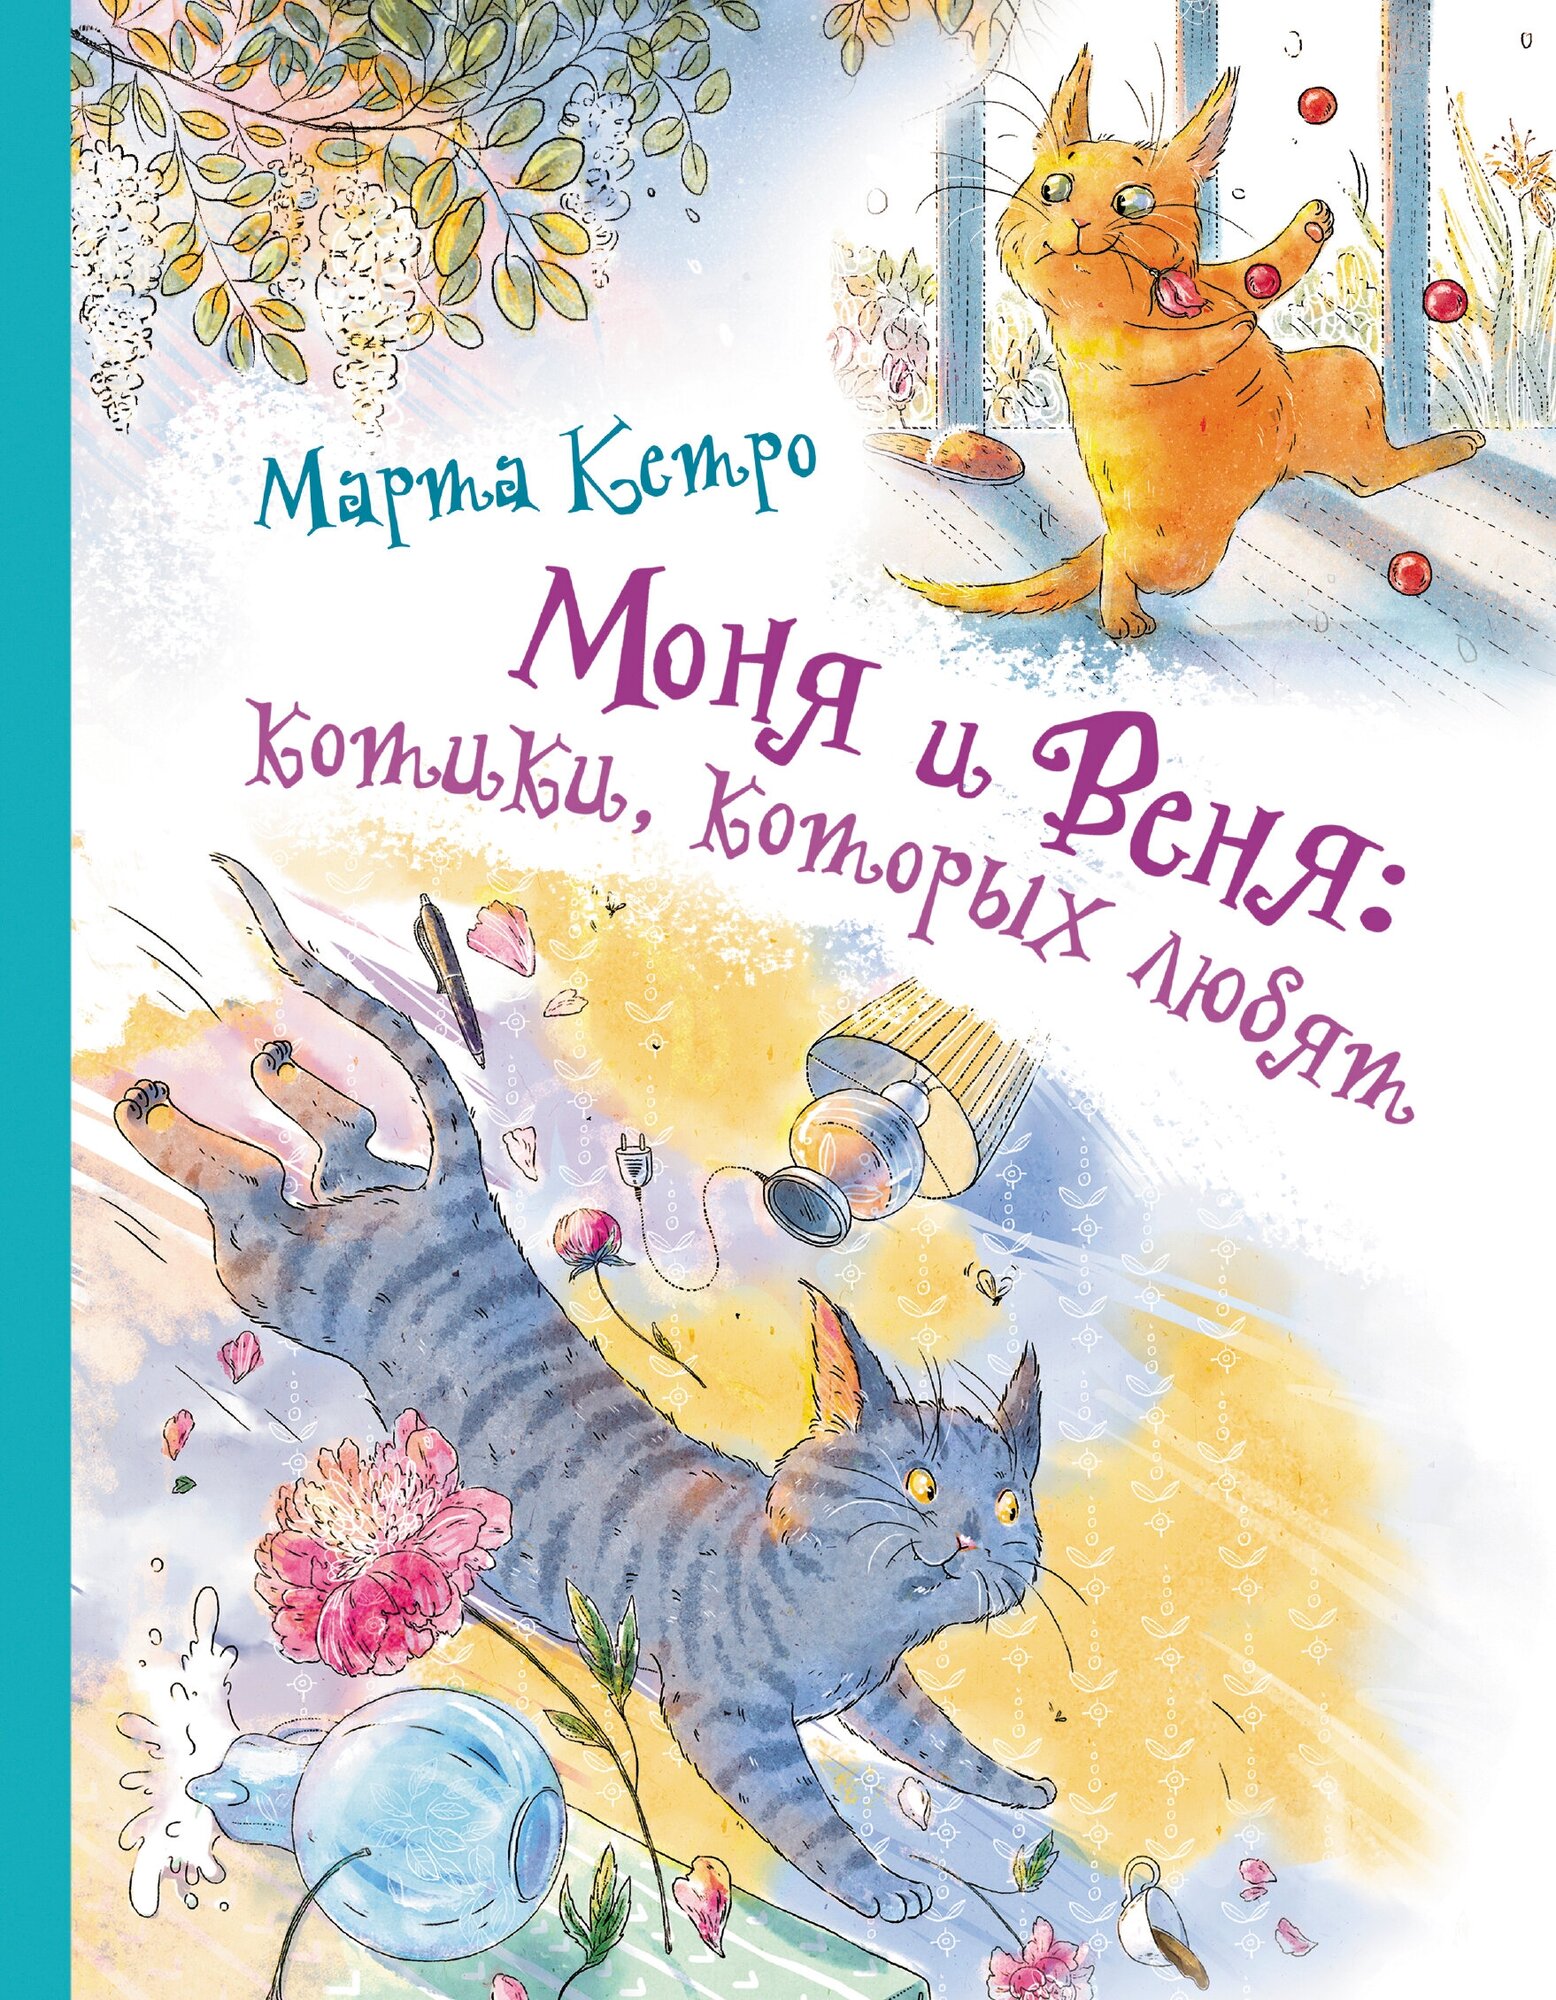 "Моня и Веня: котики, которых любят"Кетро Марта